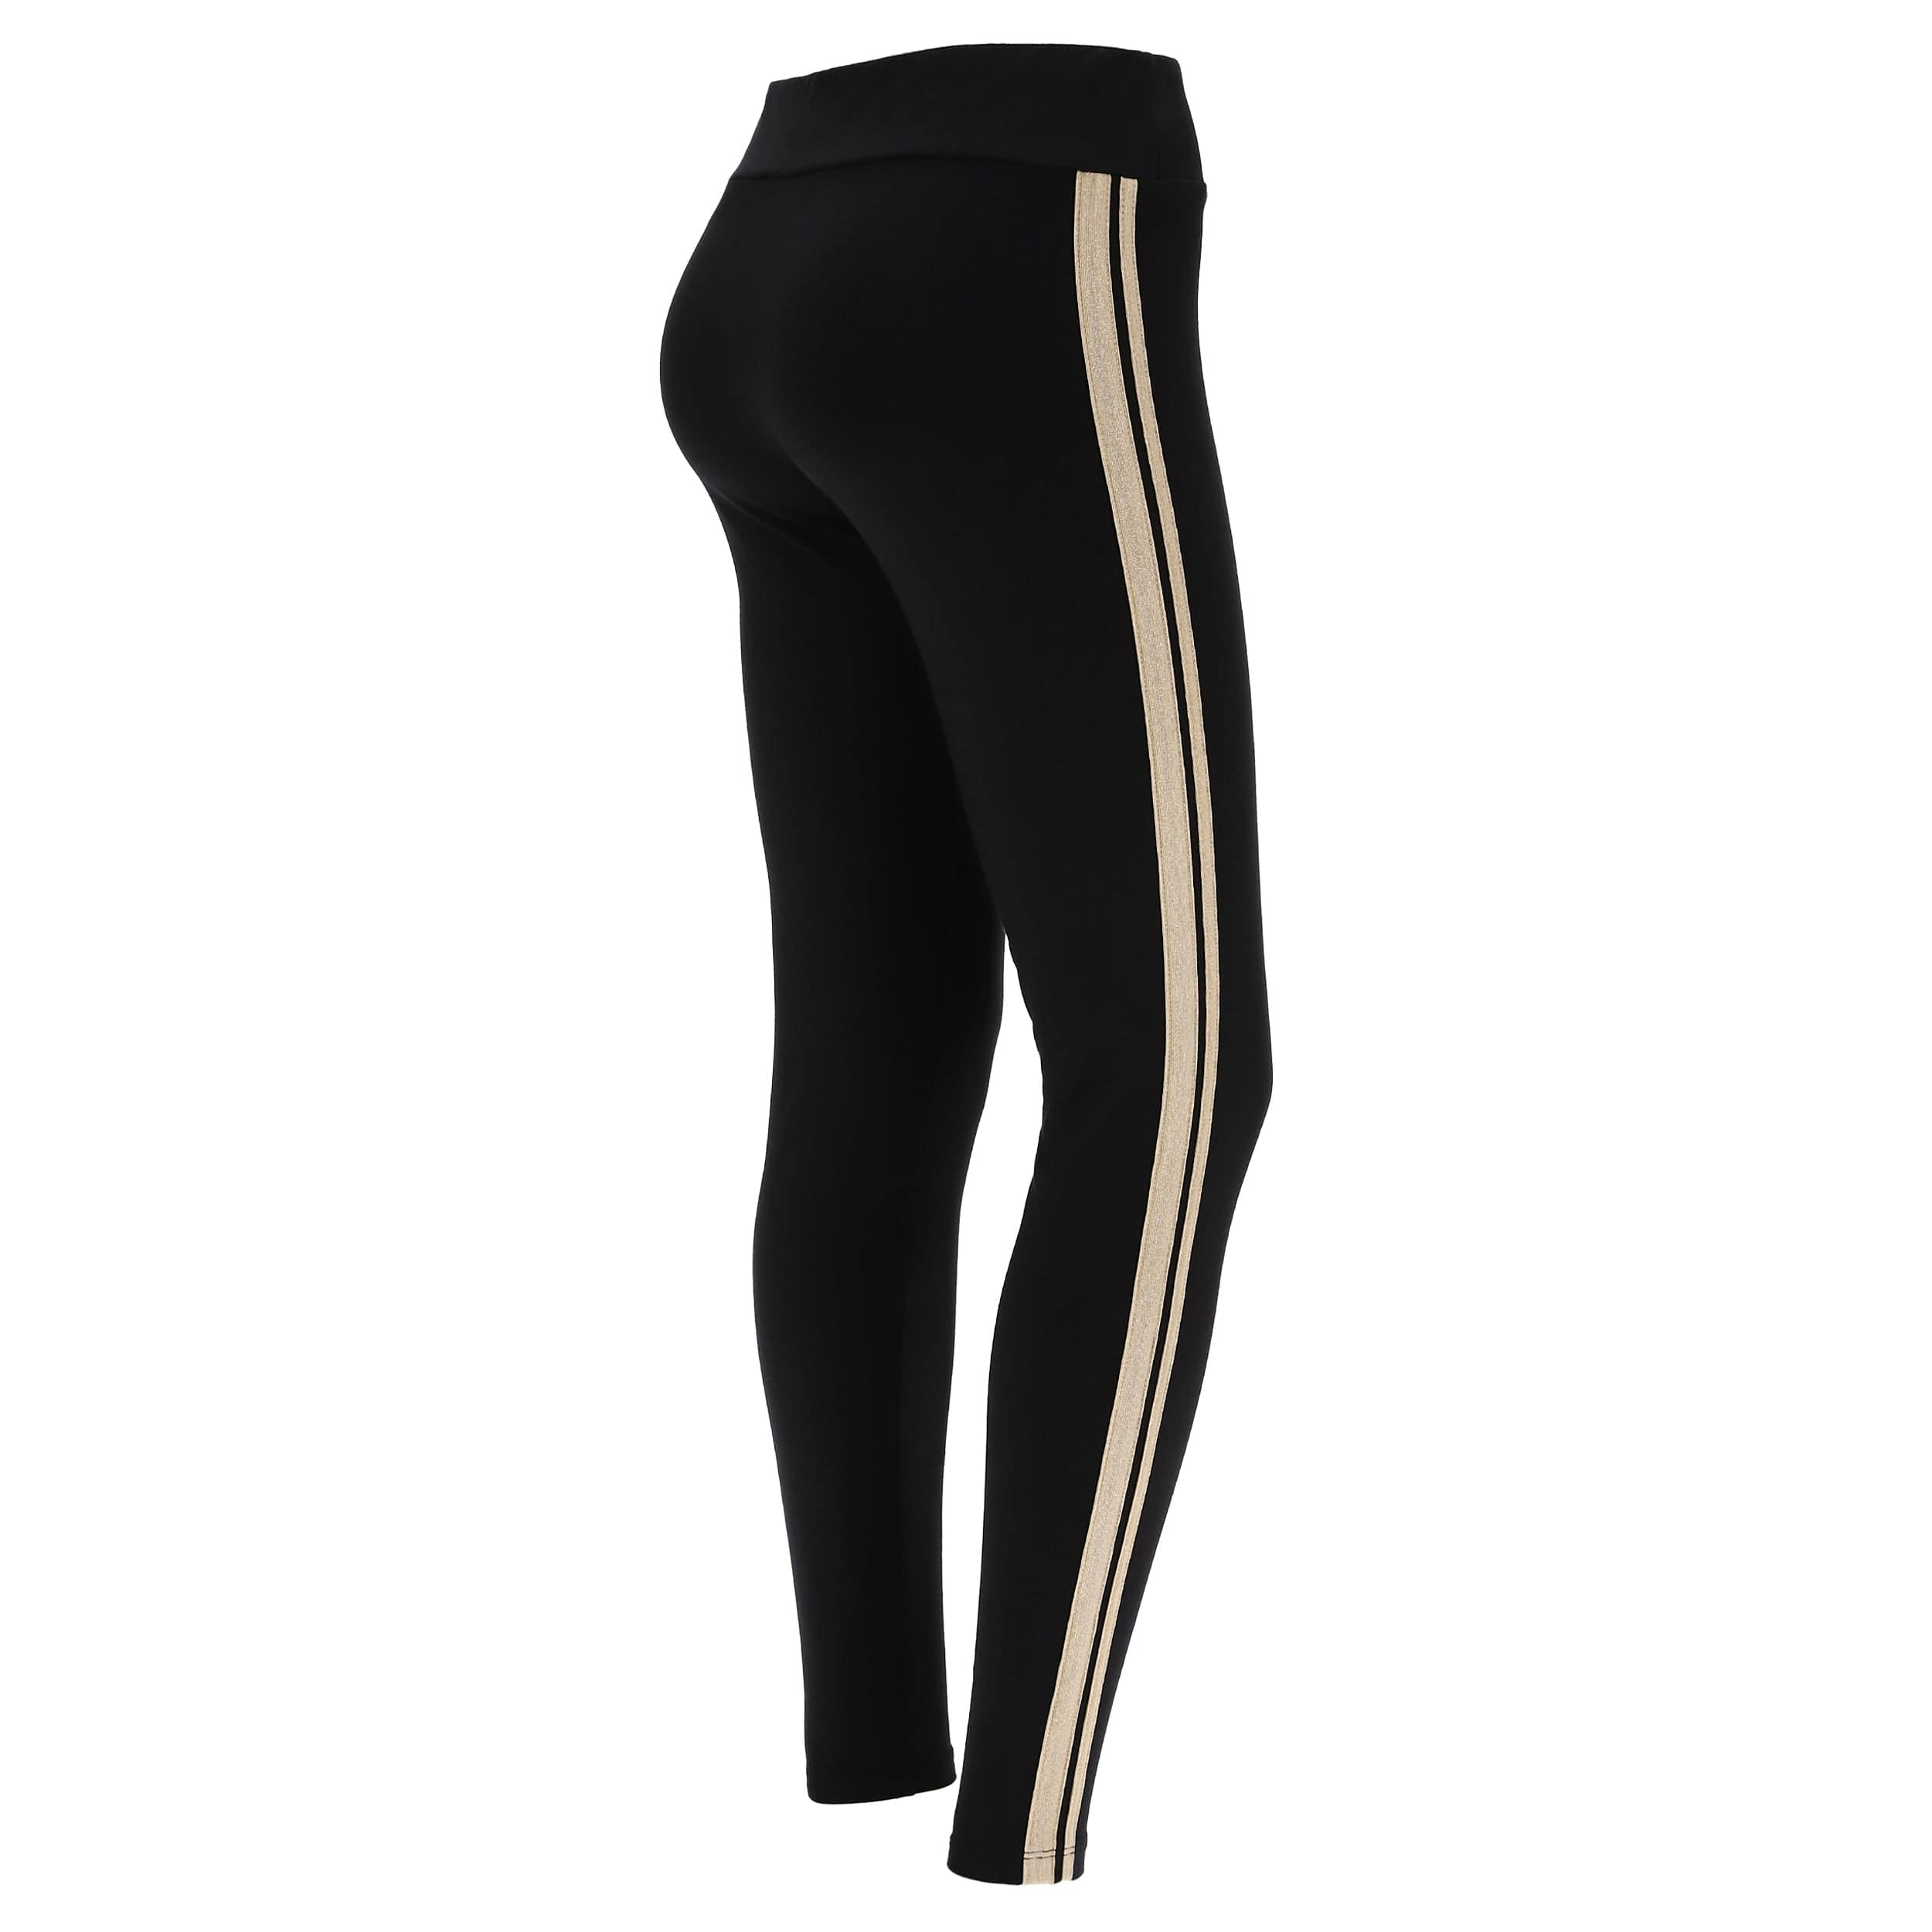 Lurex Activewear Leggings - Mid Rise - Full Length - Black + Gold Stripe 1